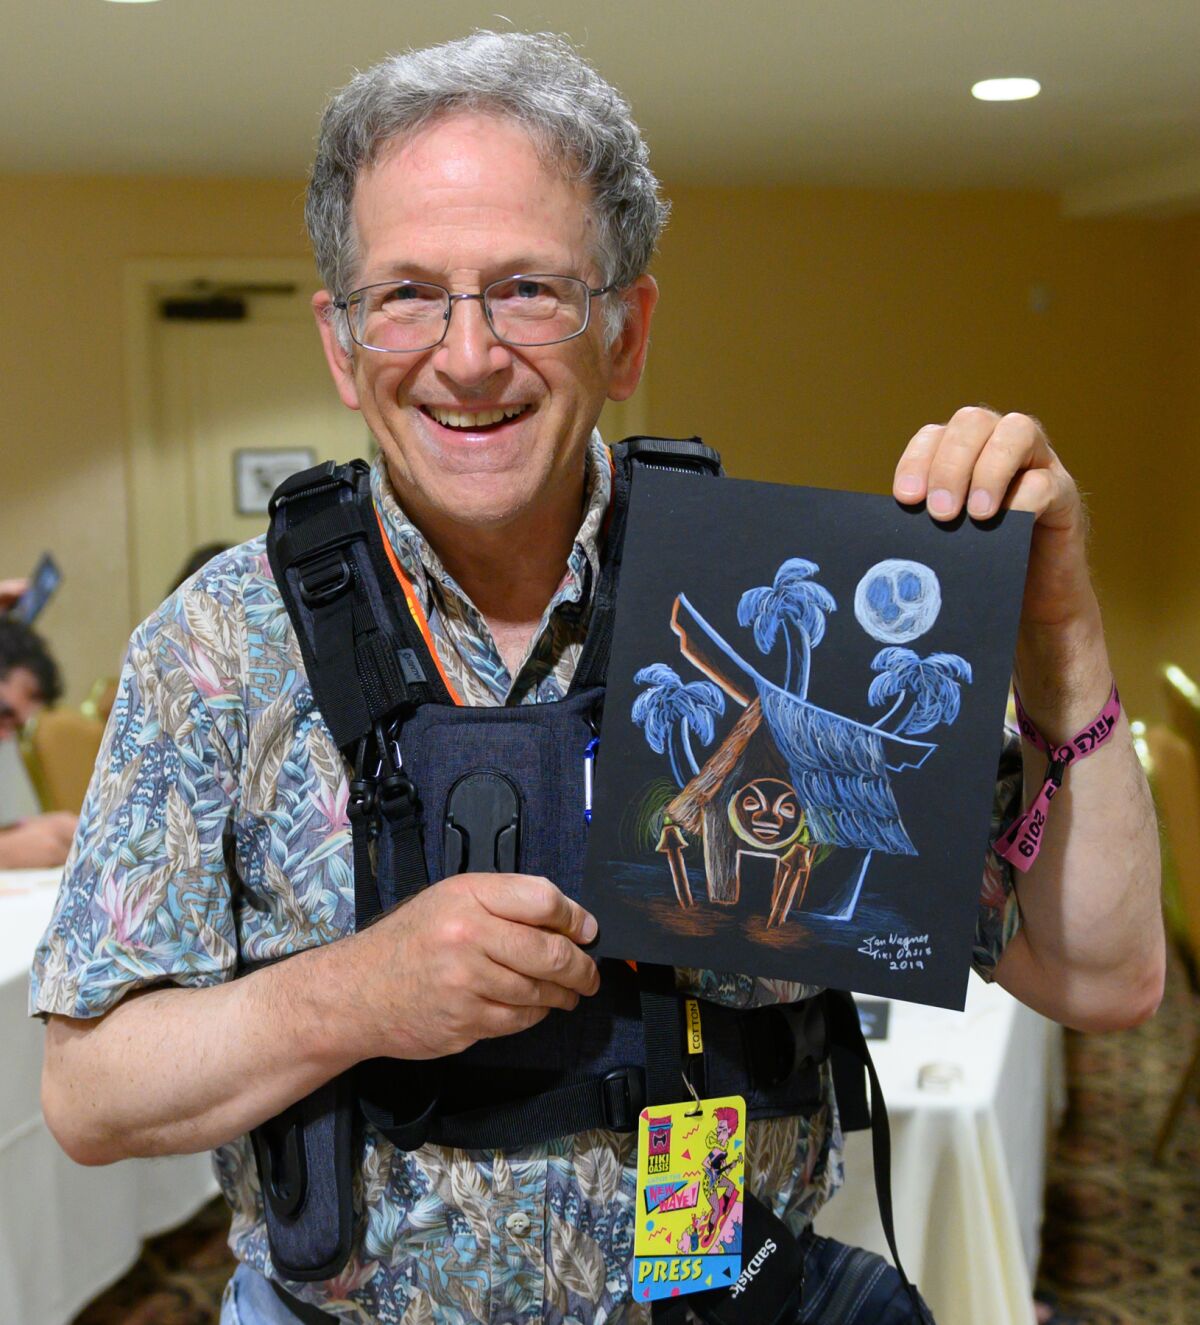 Jan with his “Tiki on Black Paper” art creation.